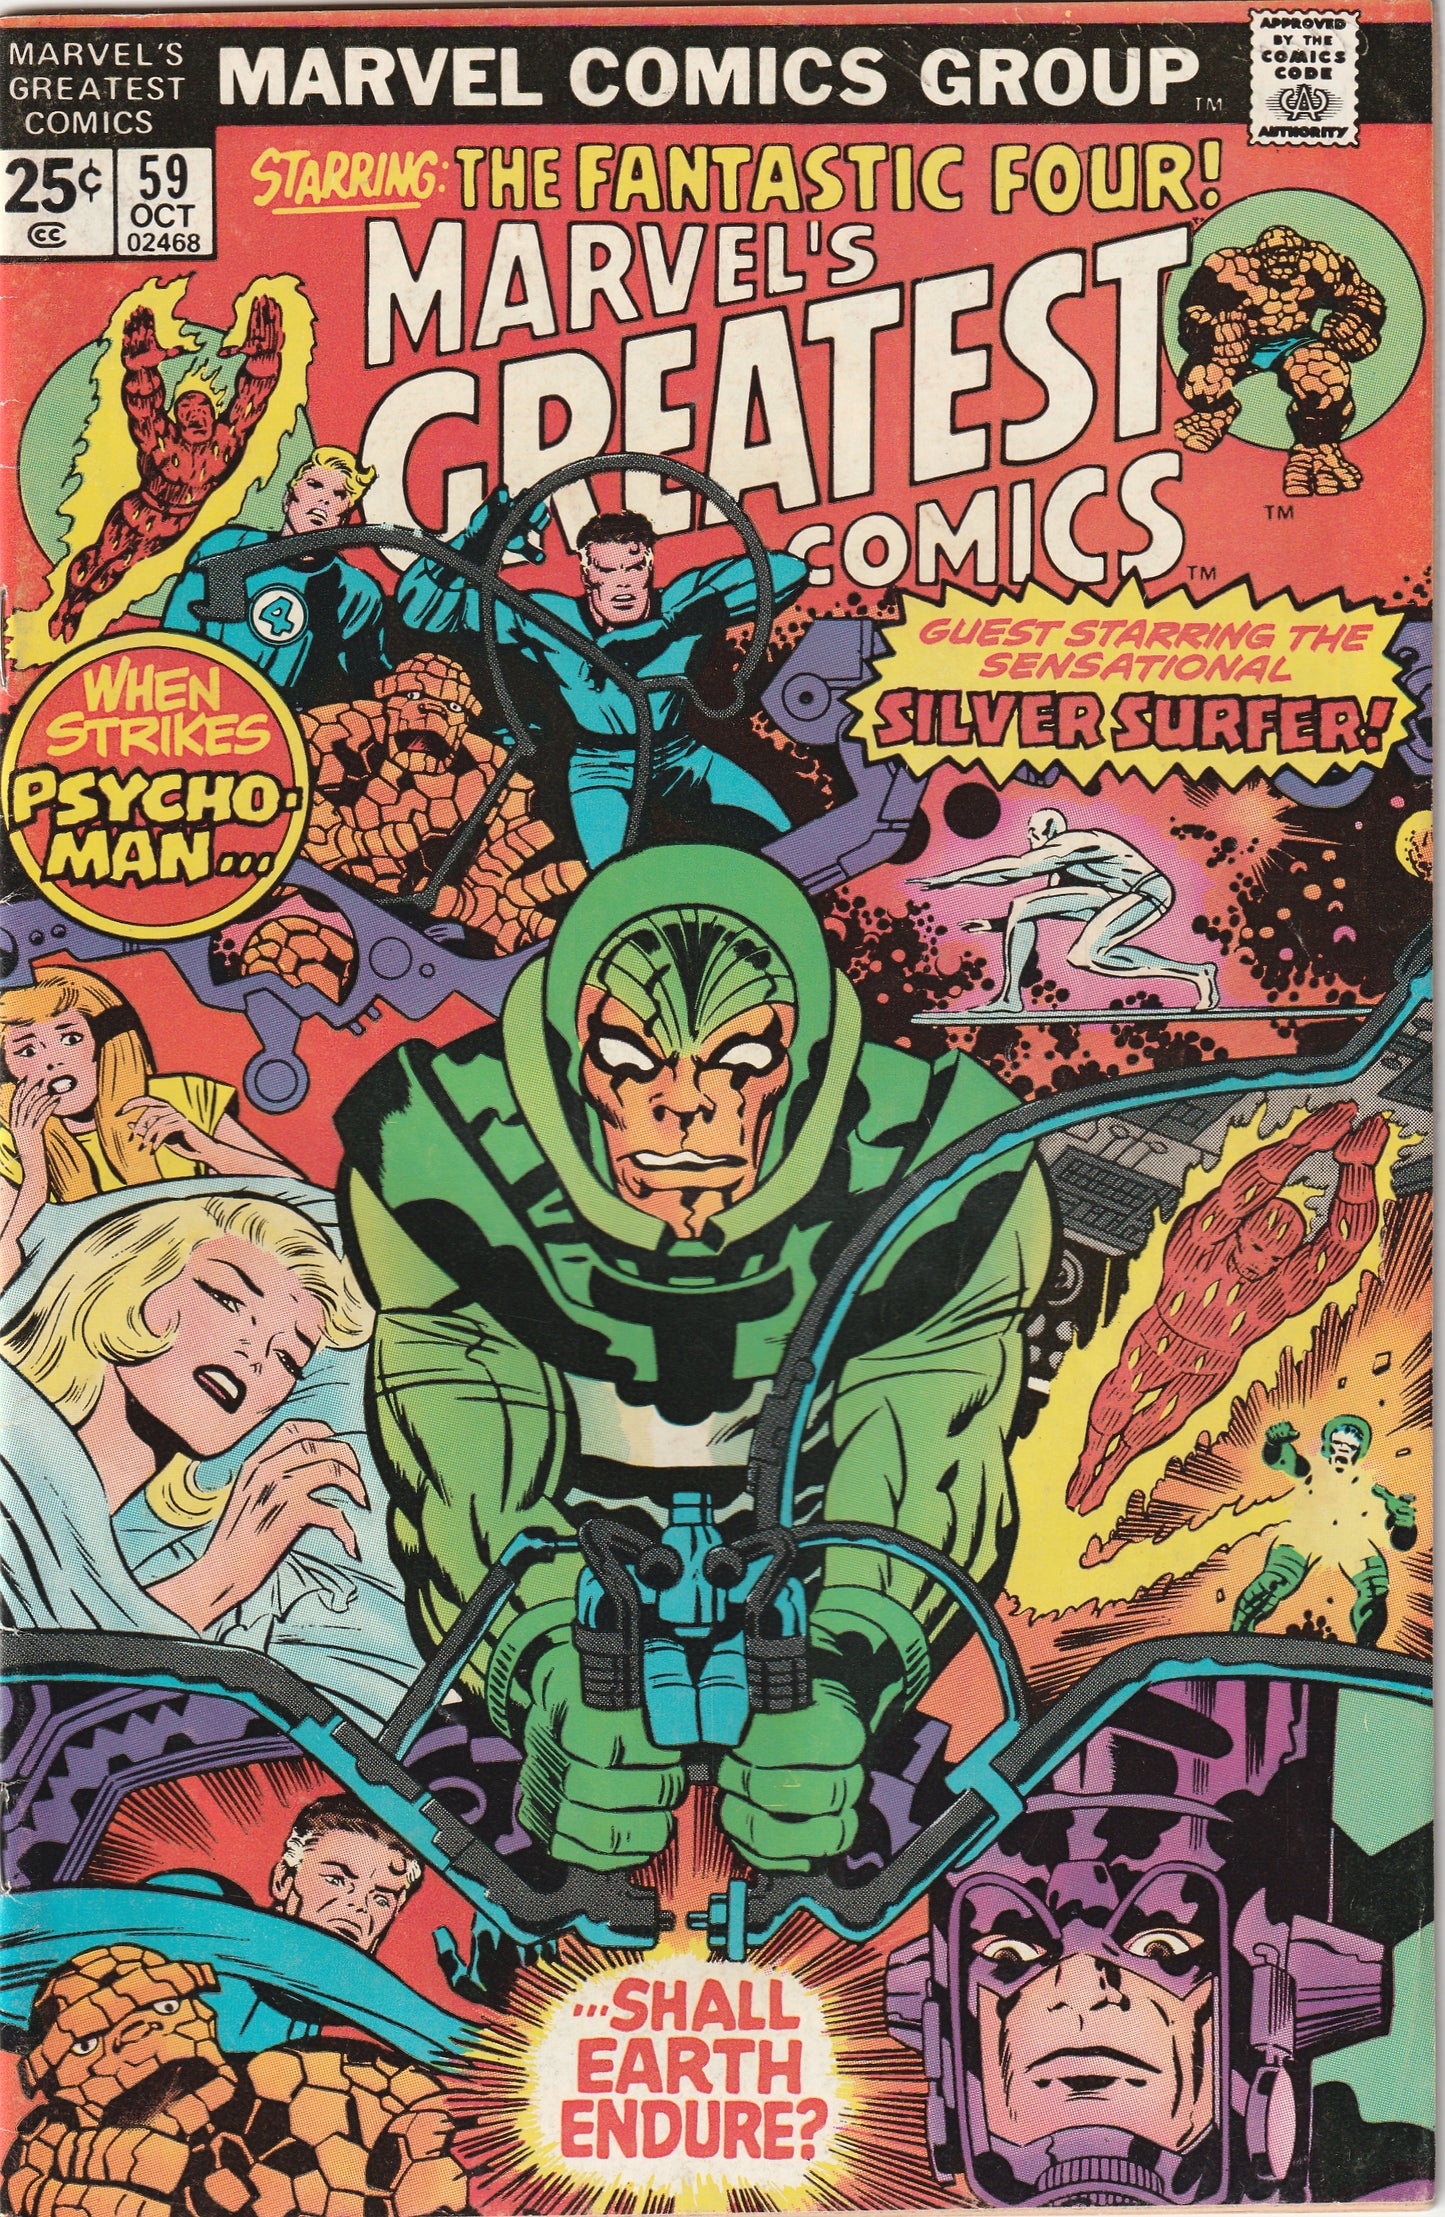 Marvel's Greatest Comics #59 (1975) - Psycho Man & Silver Surfer